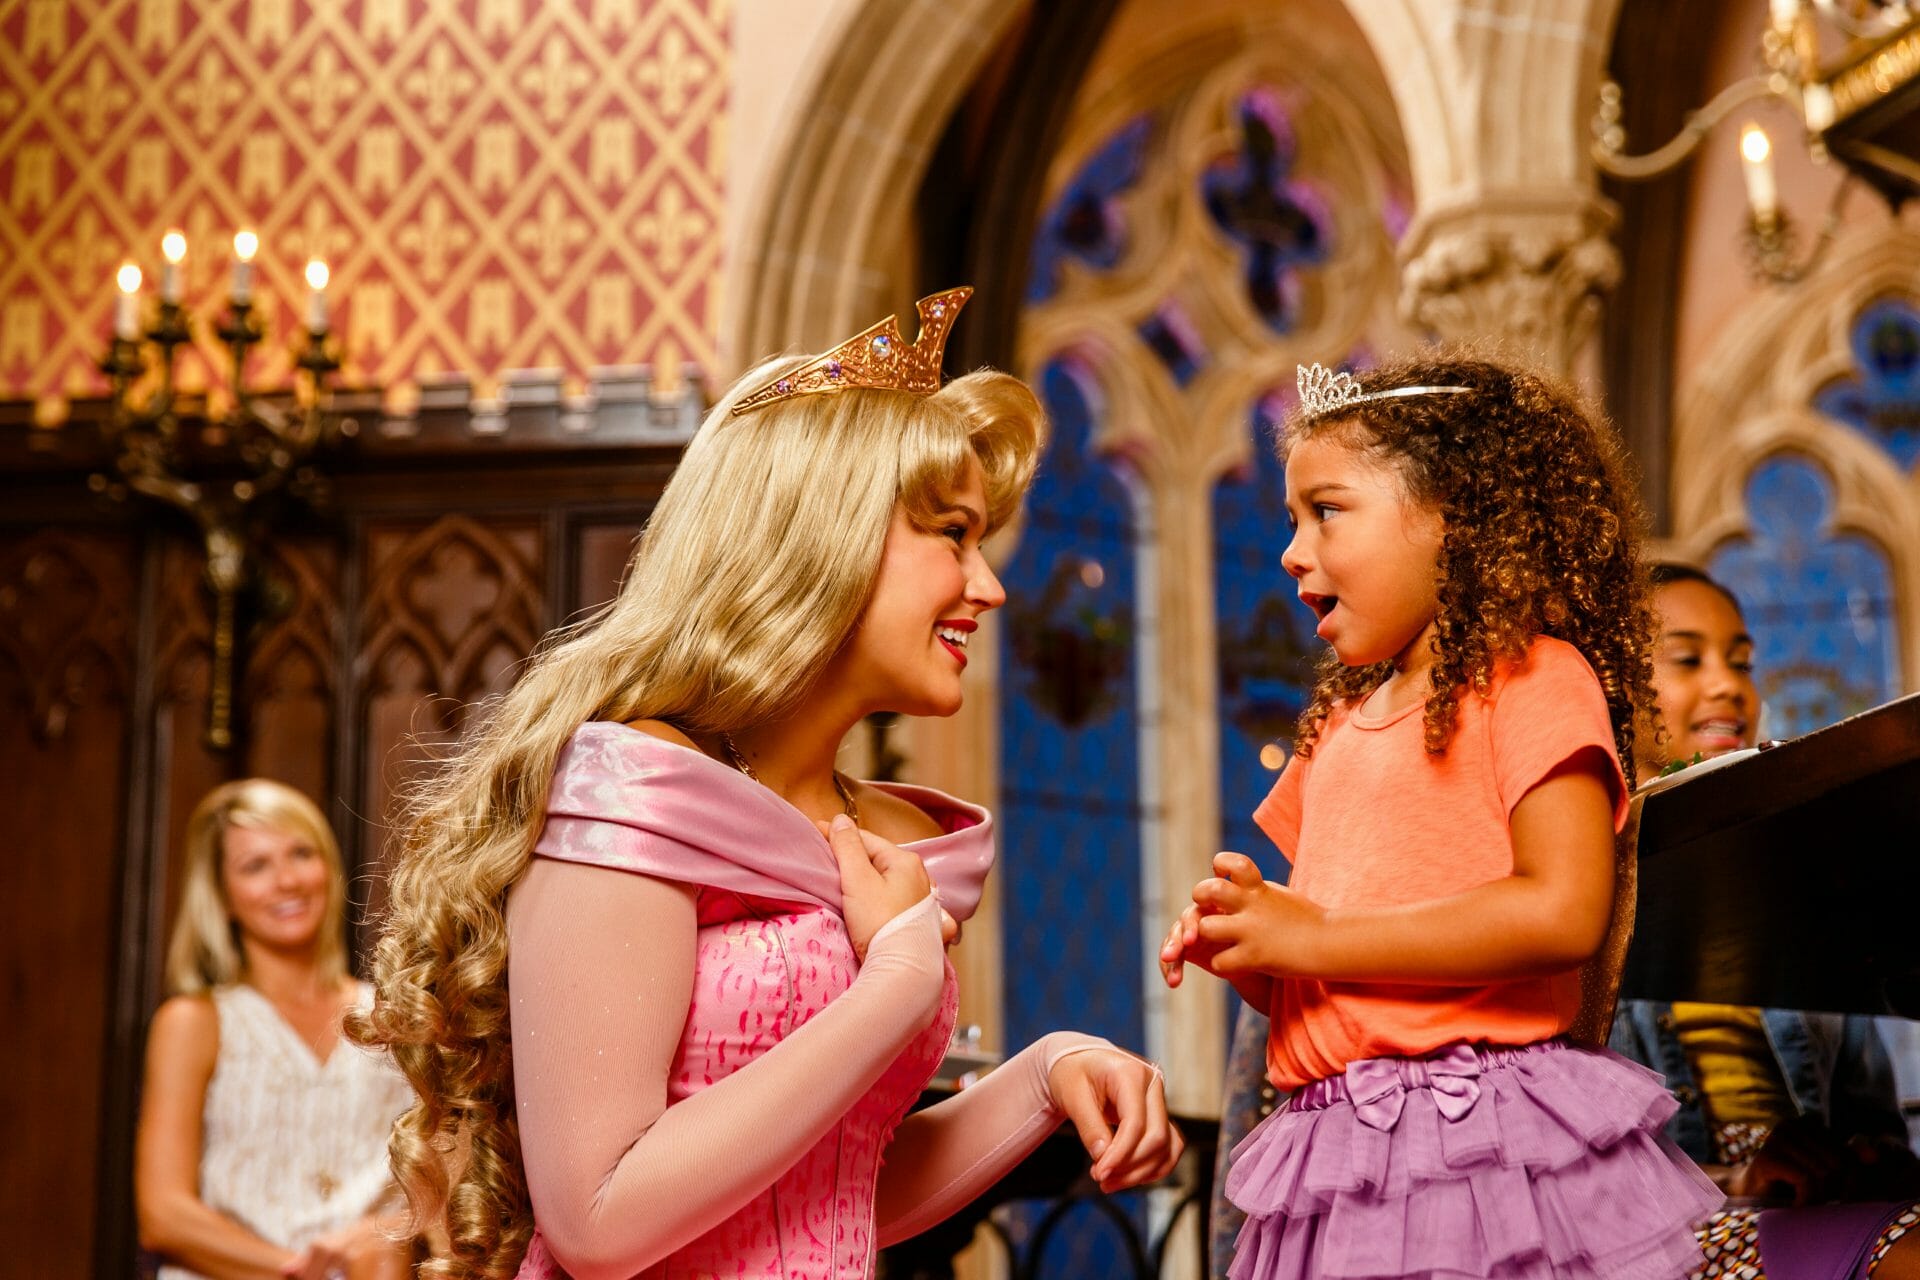 Disney princess cast member kneeling down to smile at child